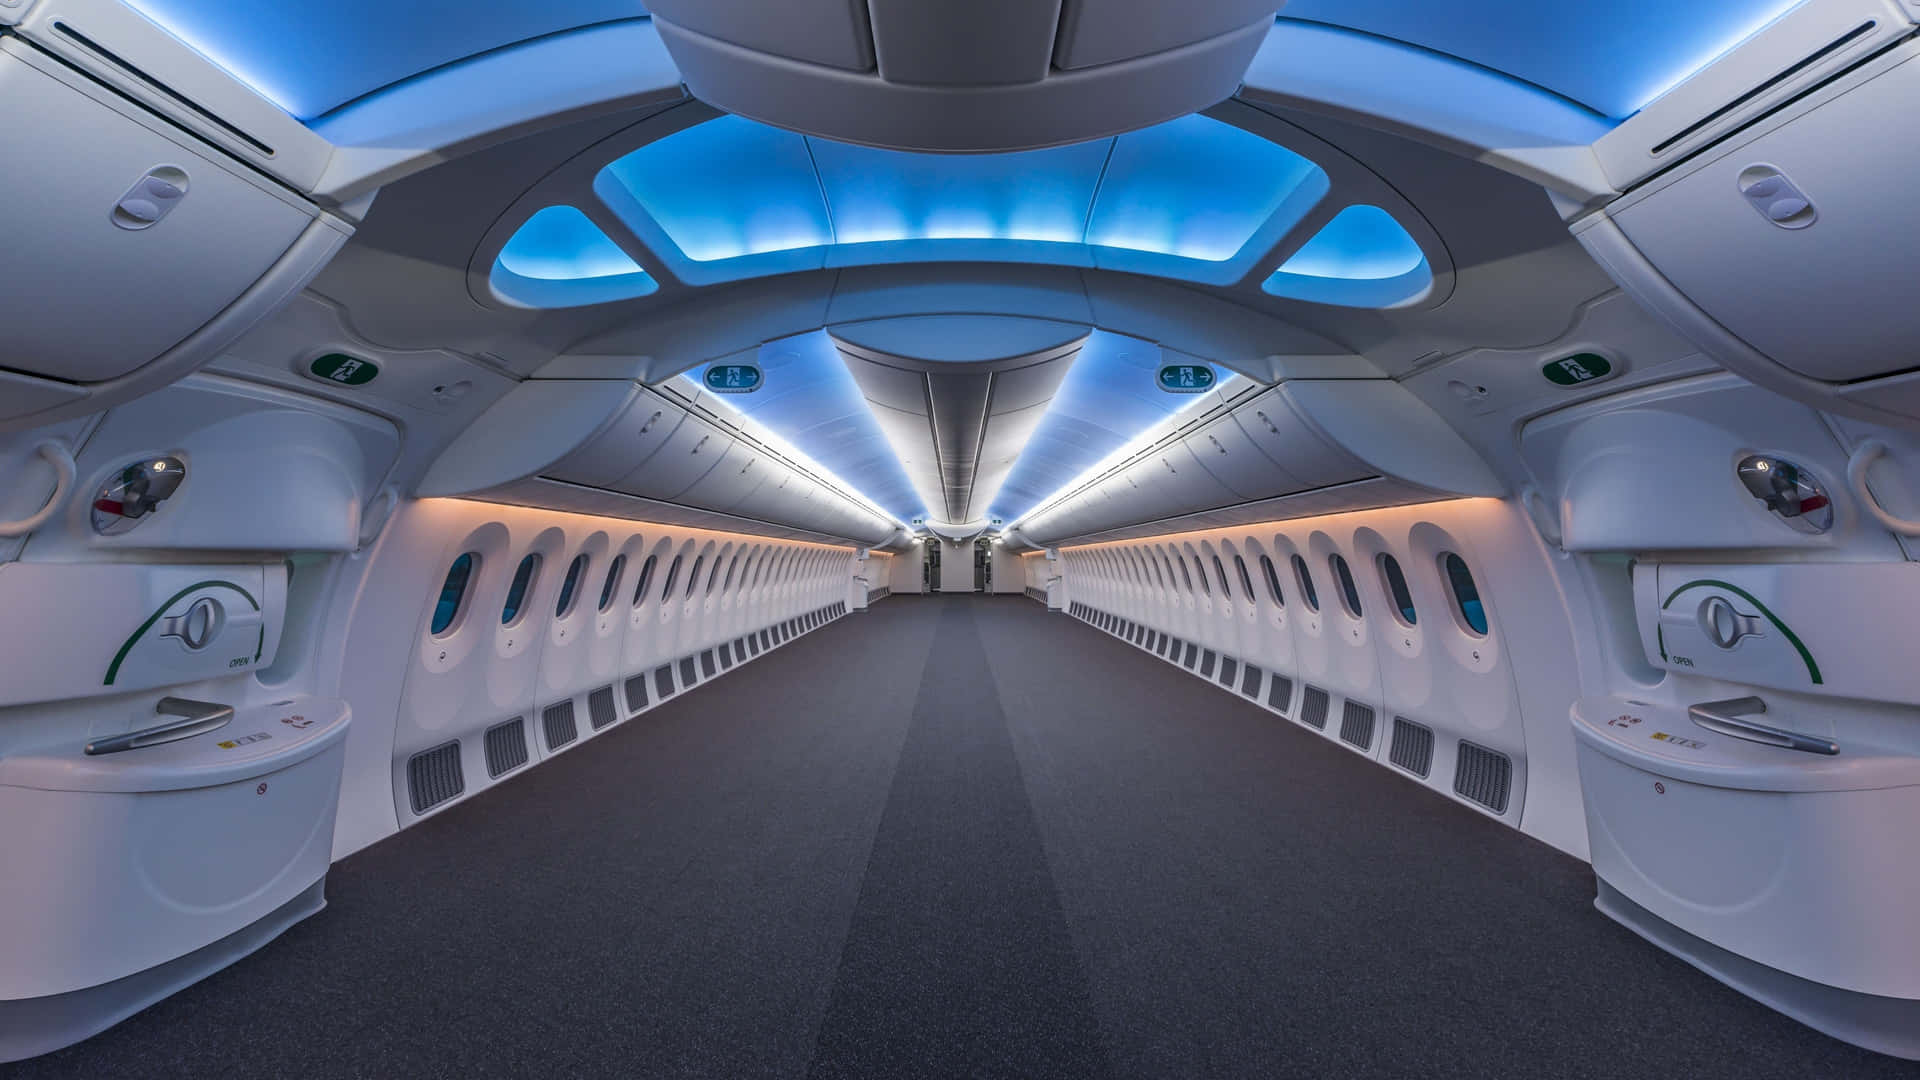 Futuristic Jumbo Jets Inside Airplane Wallpaper